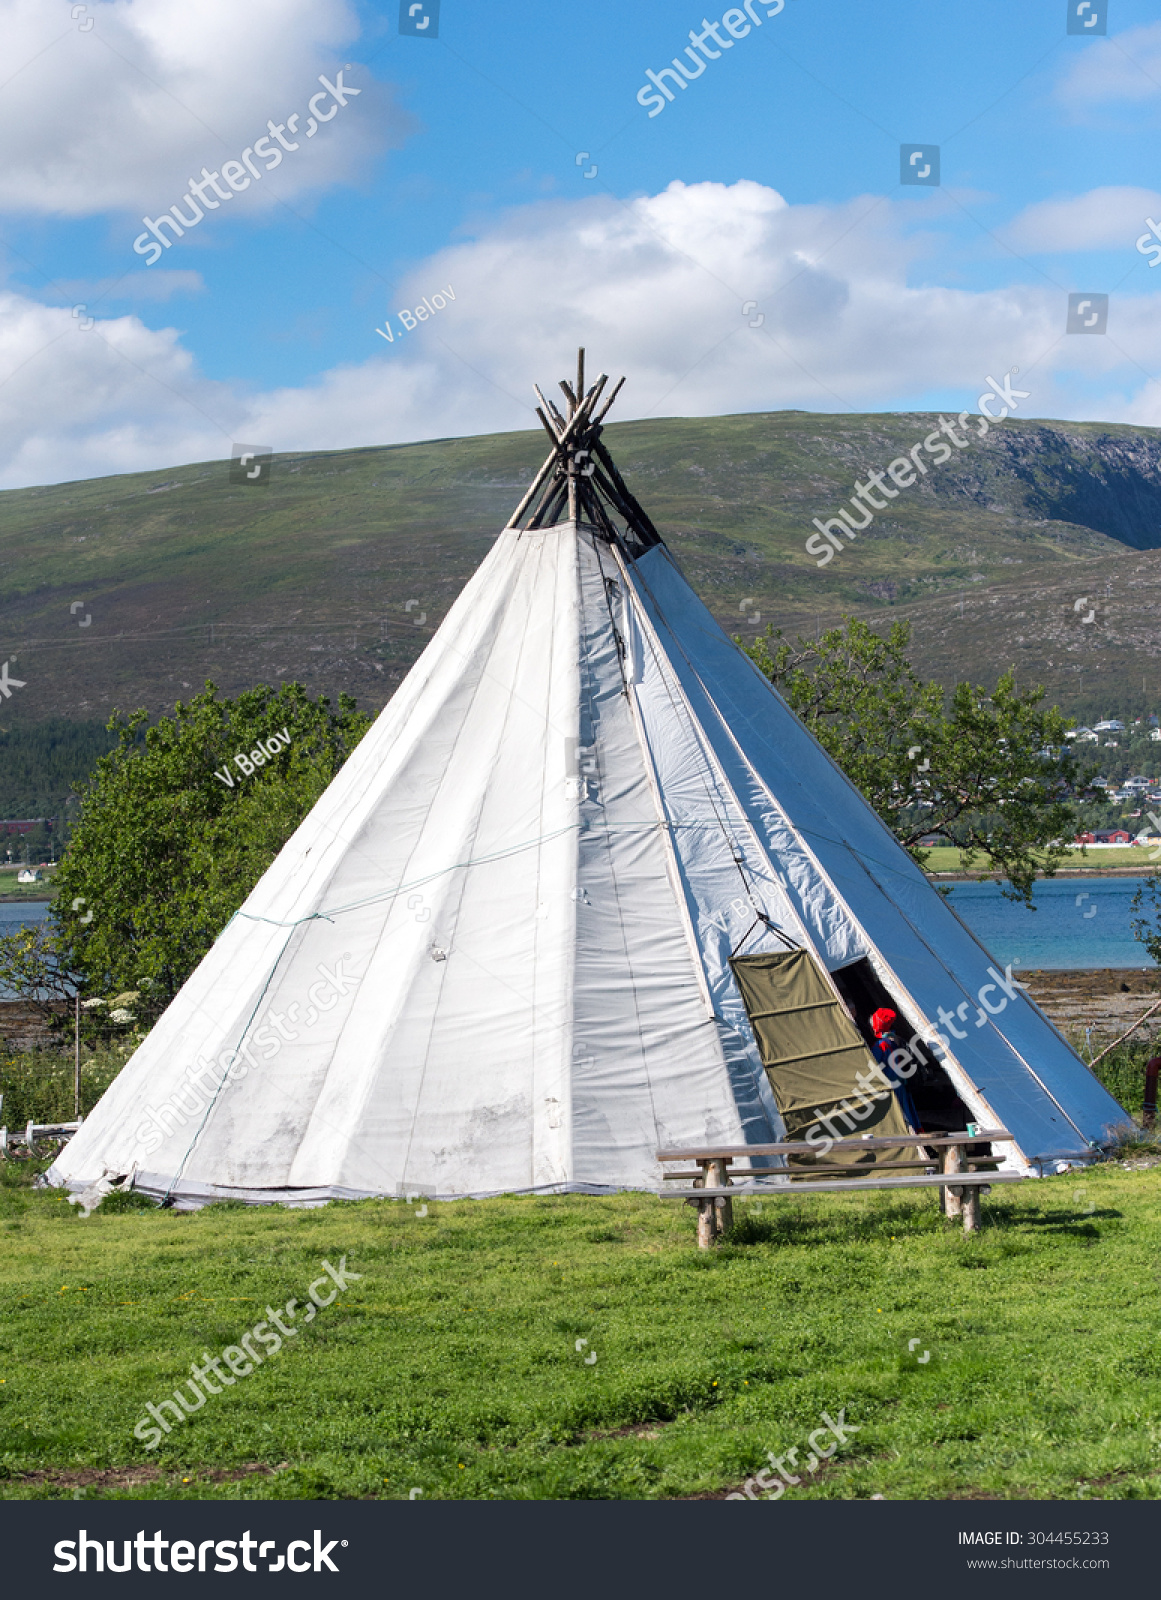 Sankthans To Sami Tents: Cultural Elements In Scandinavian Decor